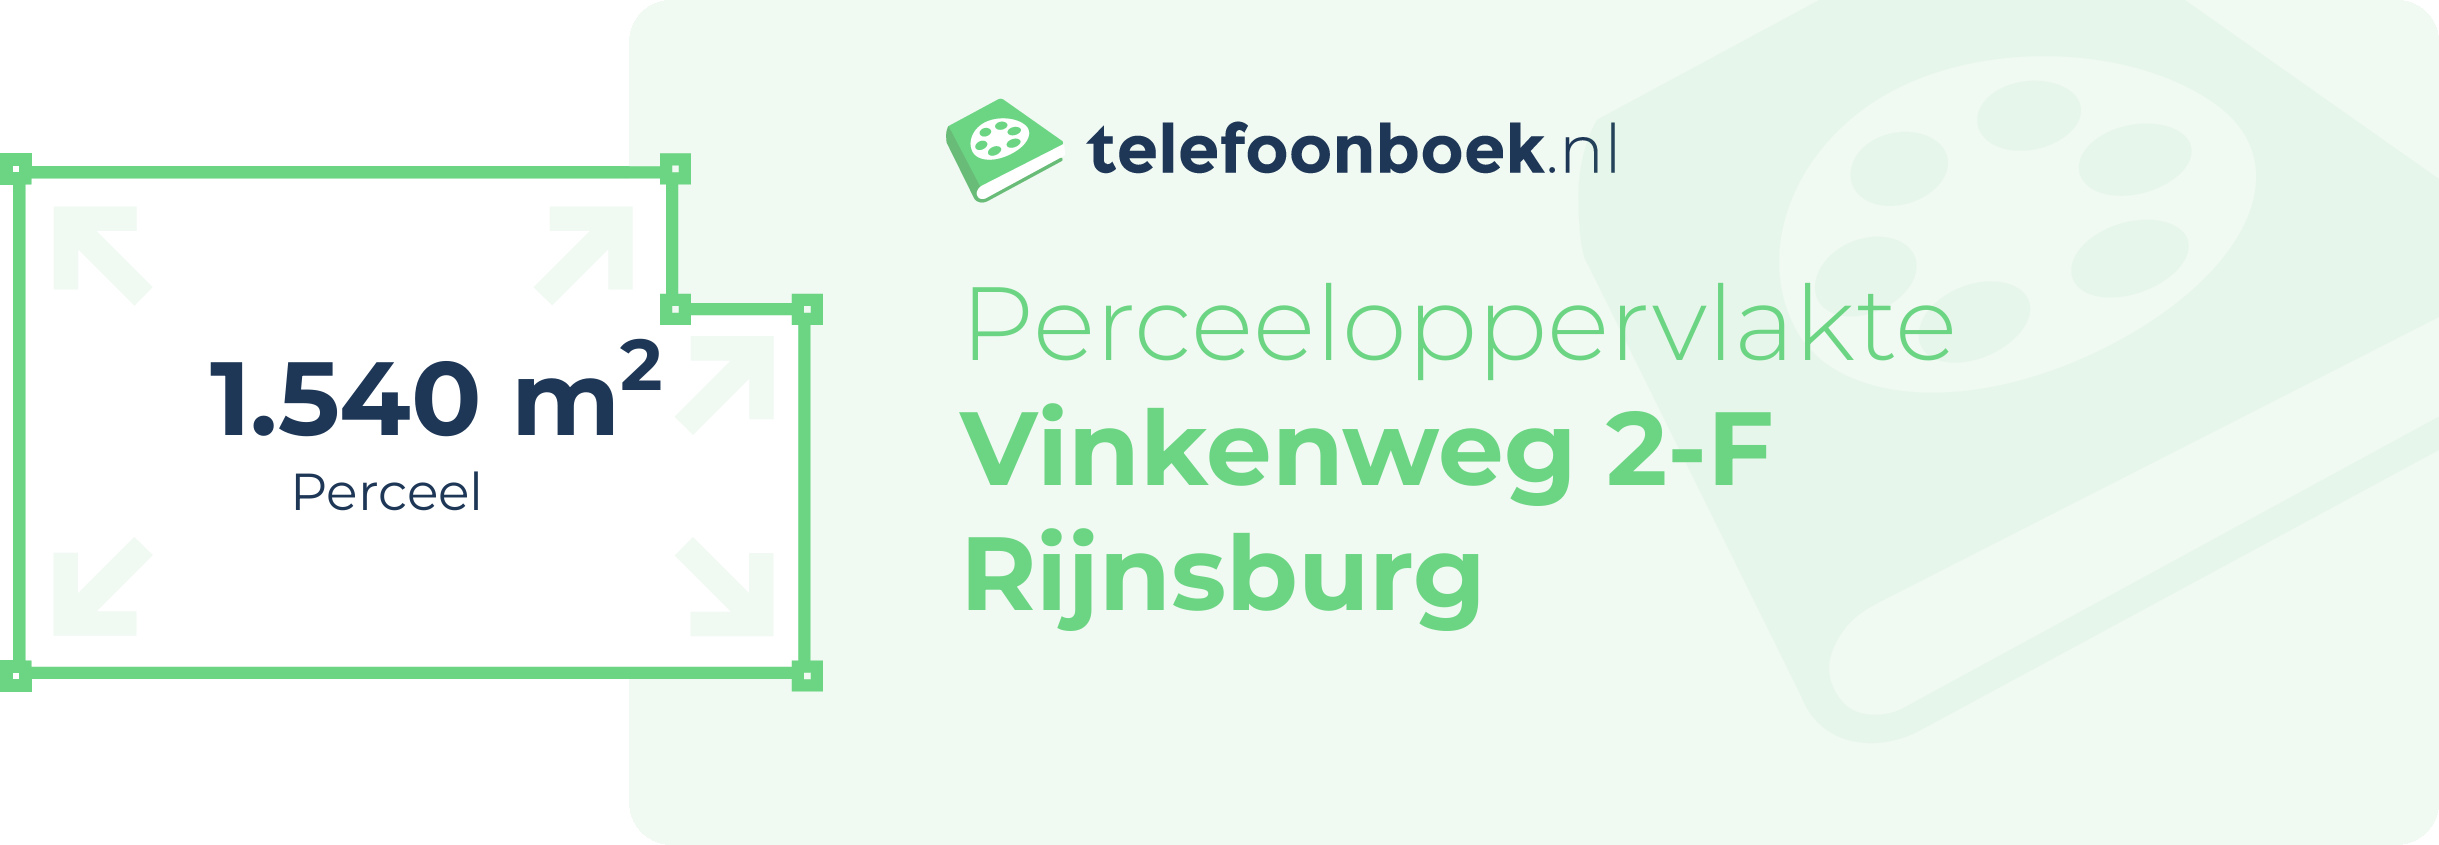 Perceeloppervlakte Vinkenweg 2-F Rijnsburg